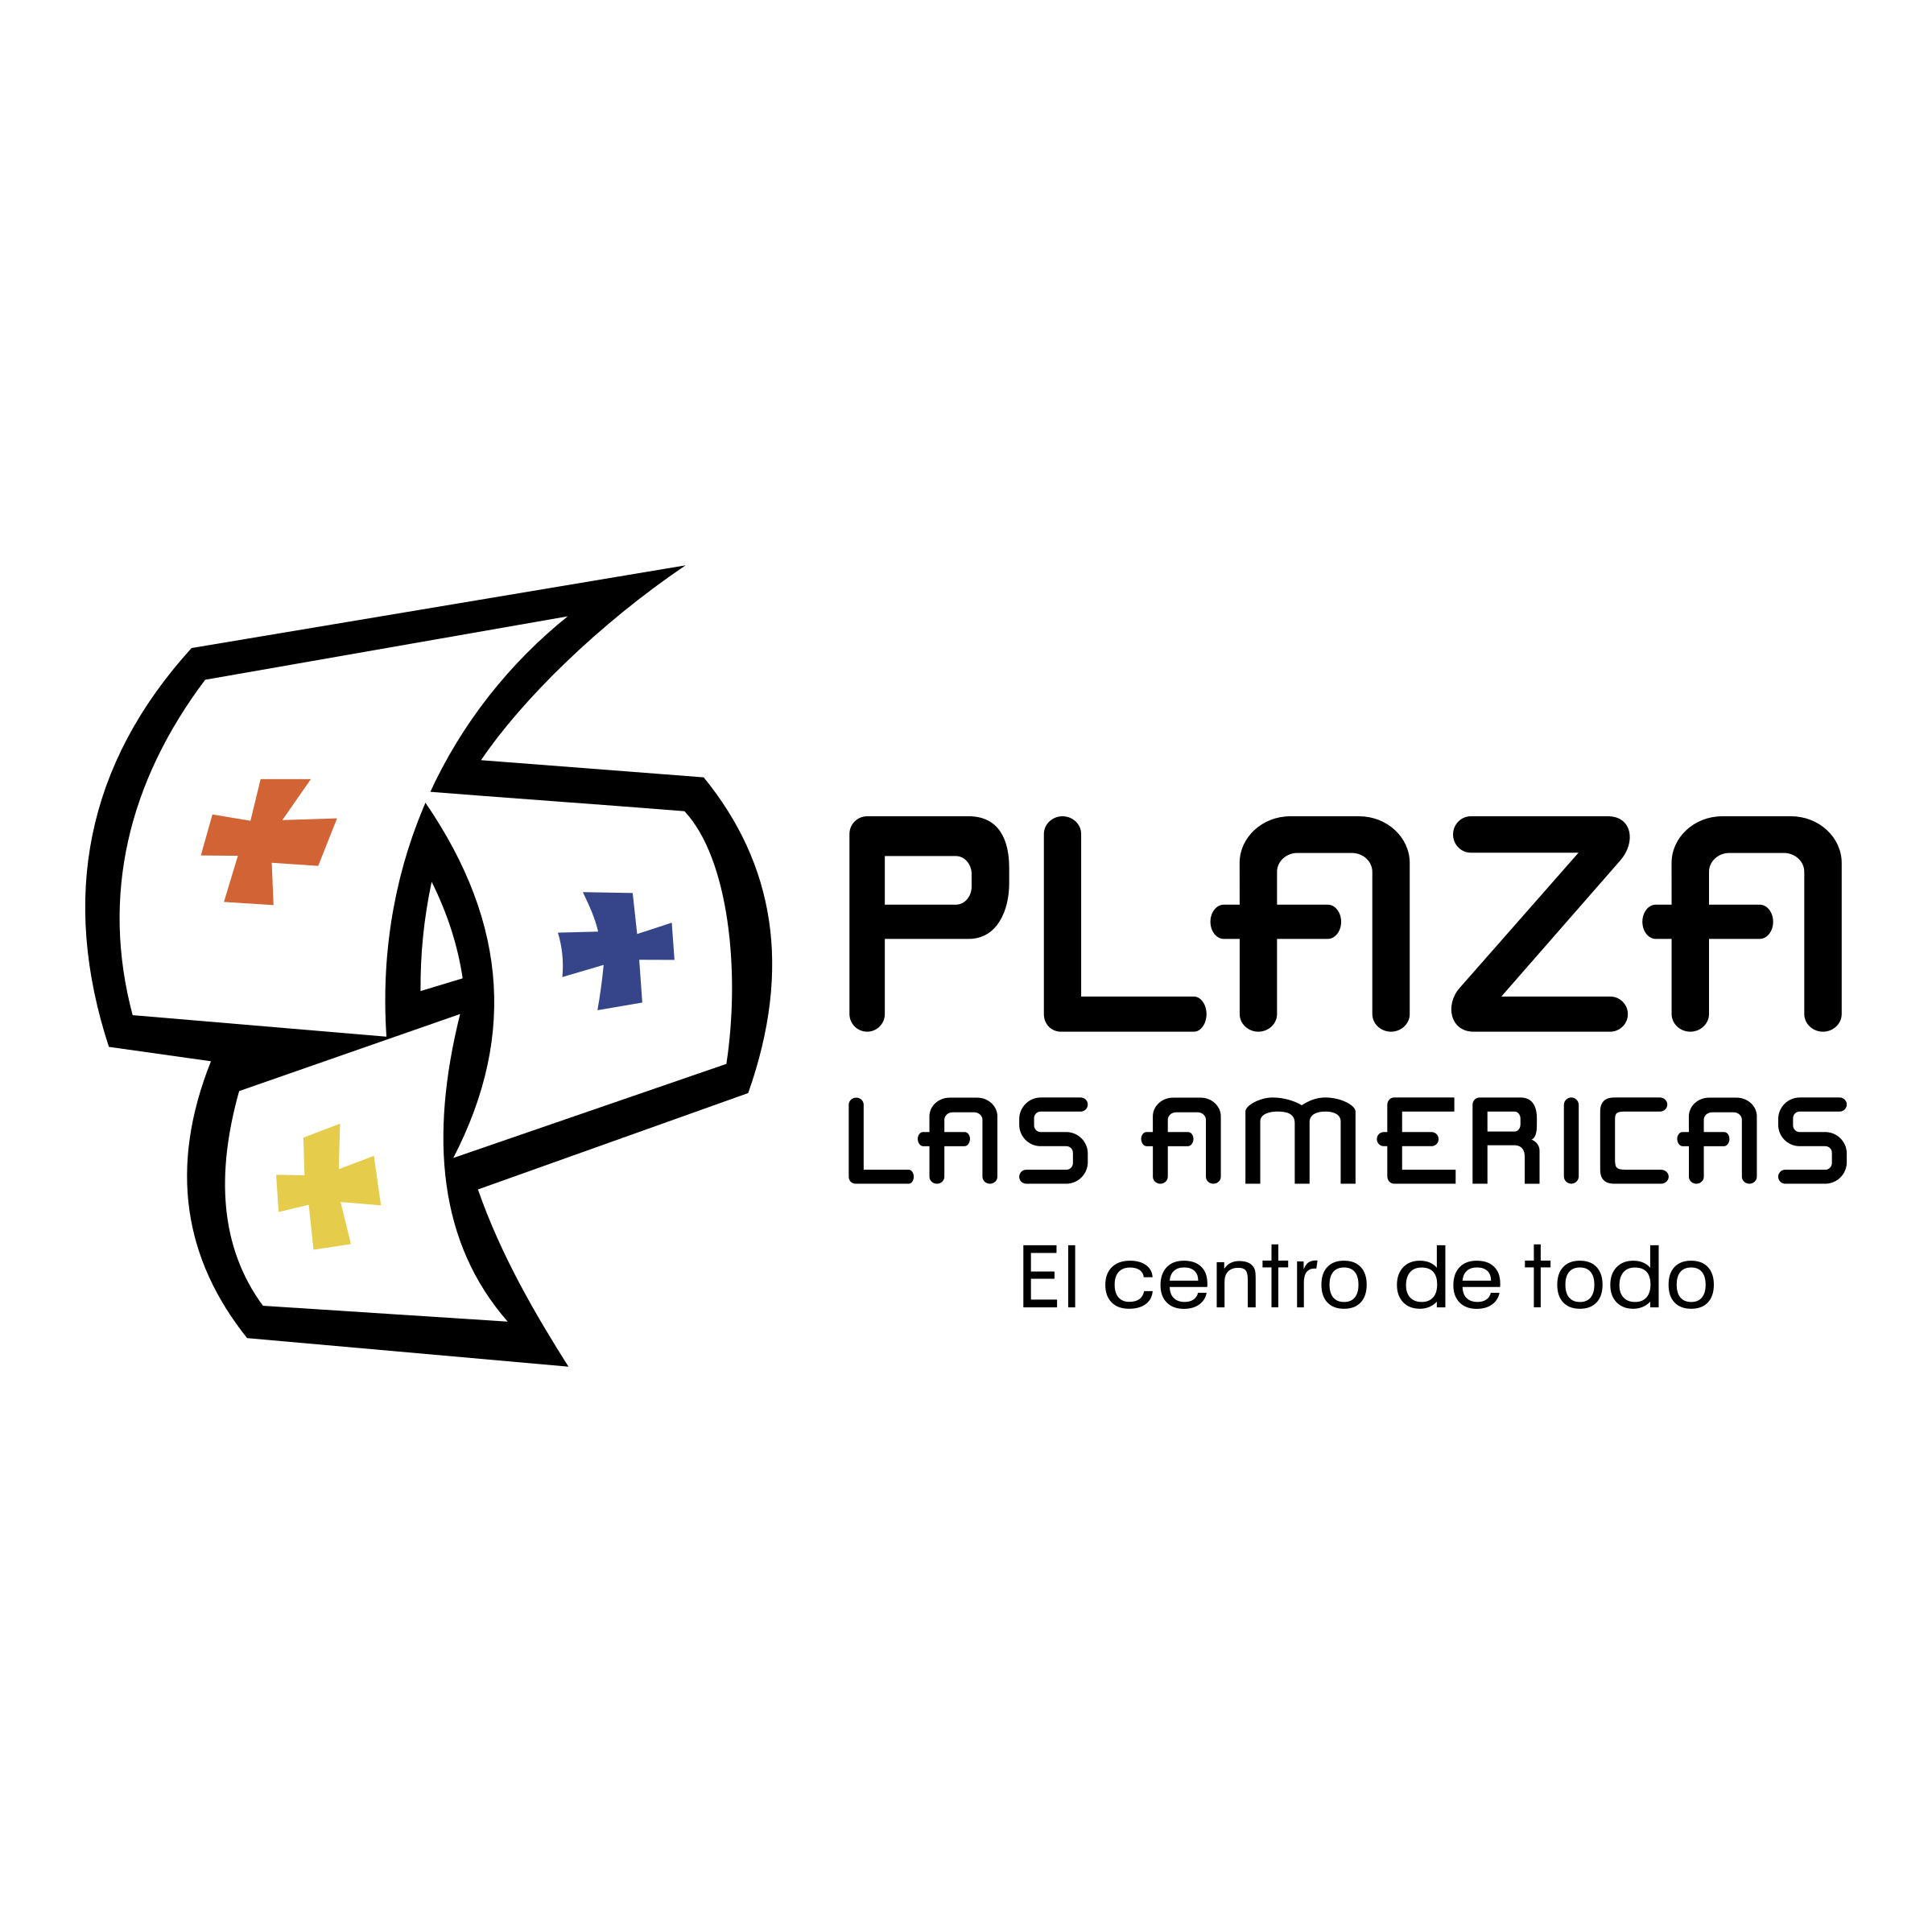 Americas Logo - Plaza Las Americas Logo PNG Transparent & SVG Vector - Freebie Supply